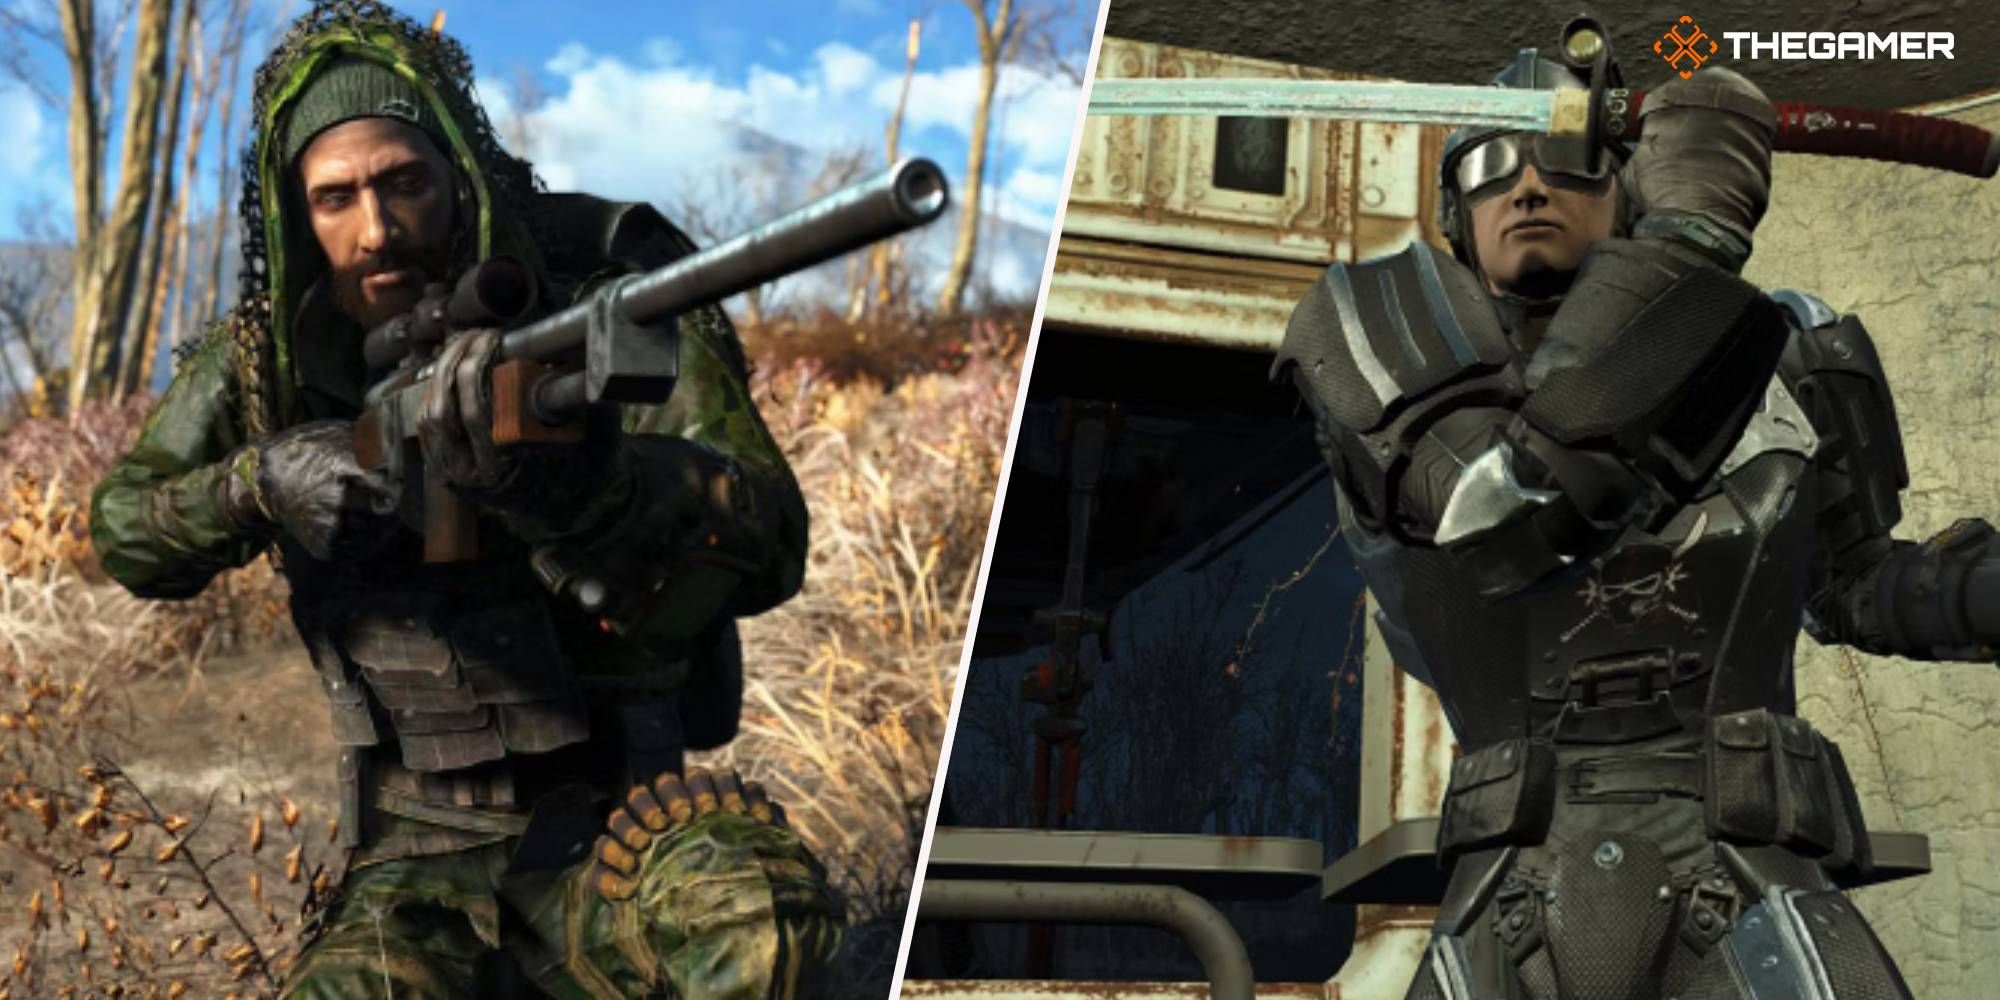 Despite Fallout 4 making it a villain, MIT tries to convince us it